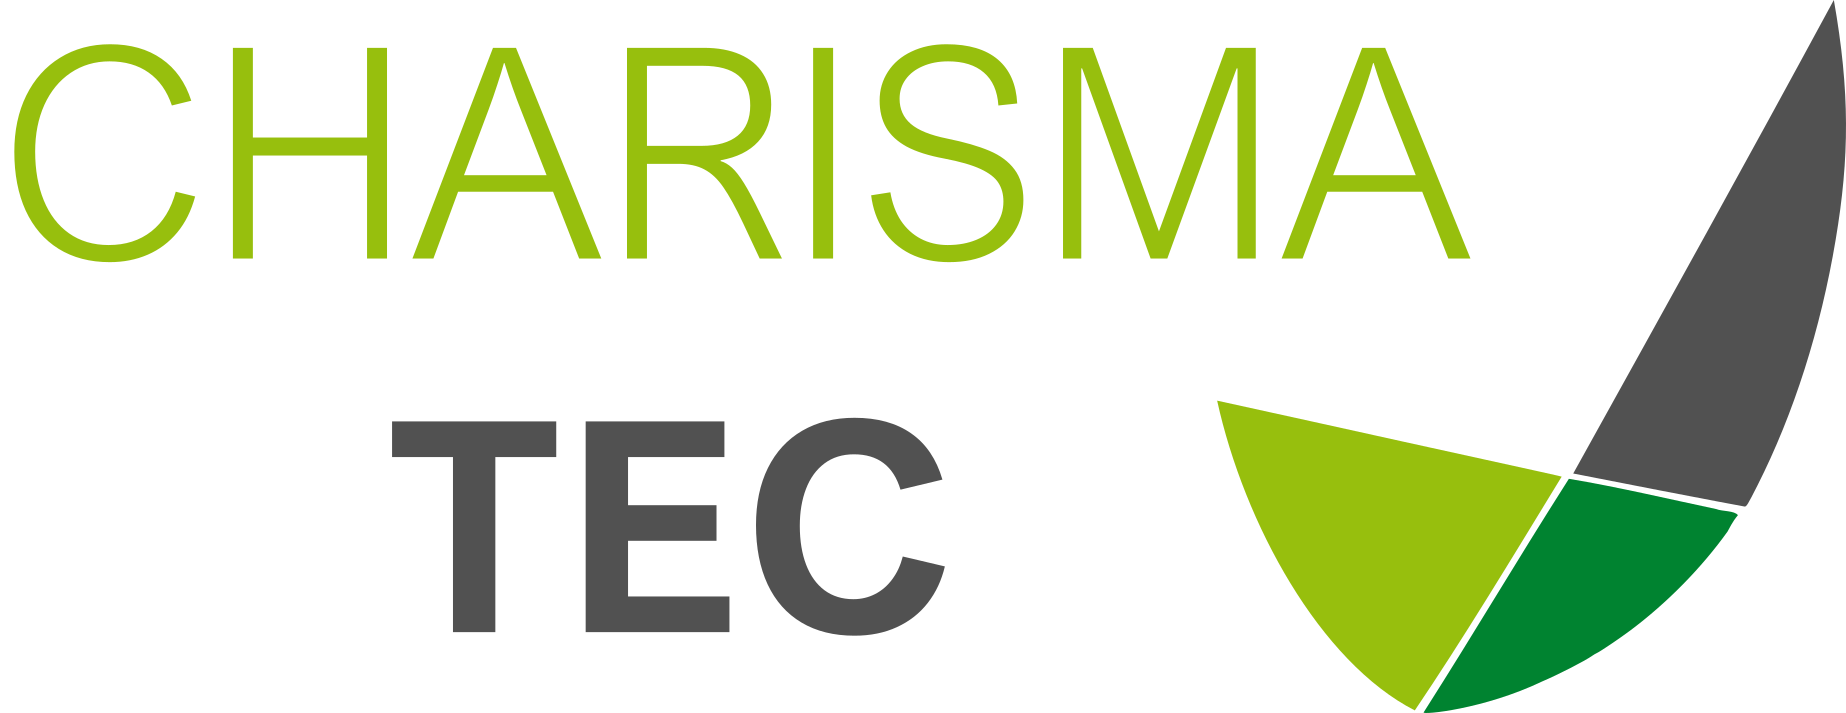 Personalvermittlung Jobbörse Charisma-Tec Personal Industrie Logo